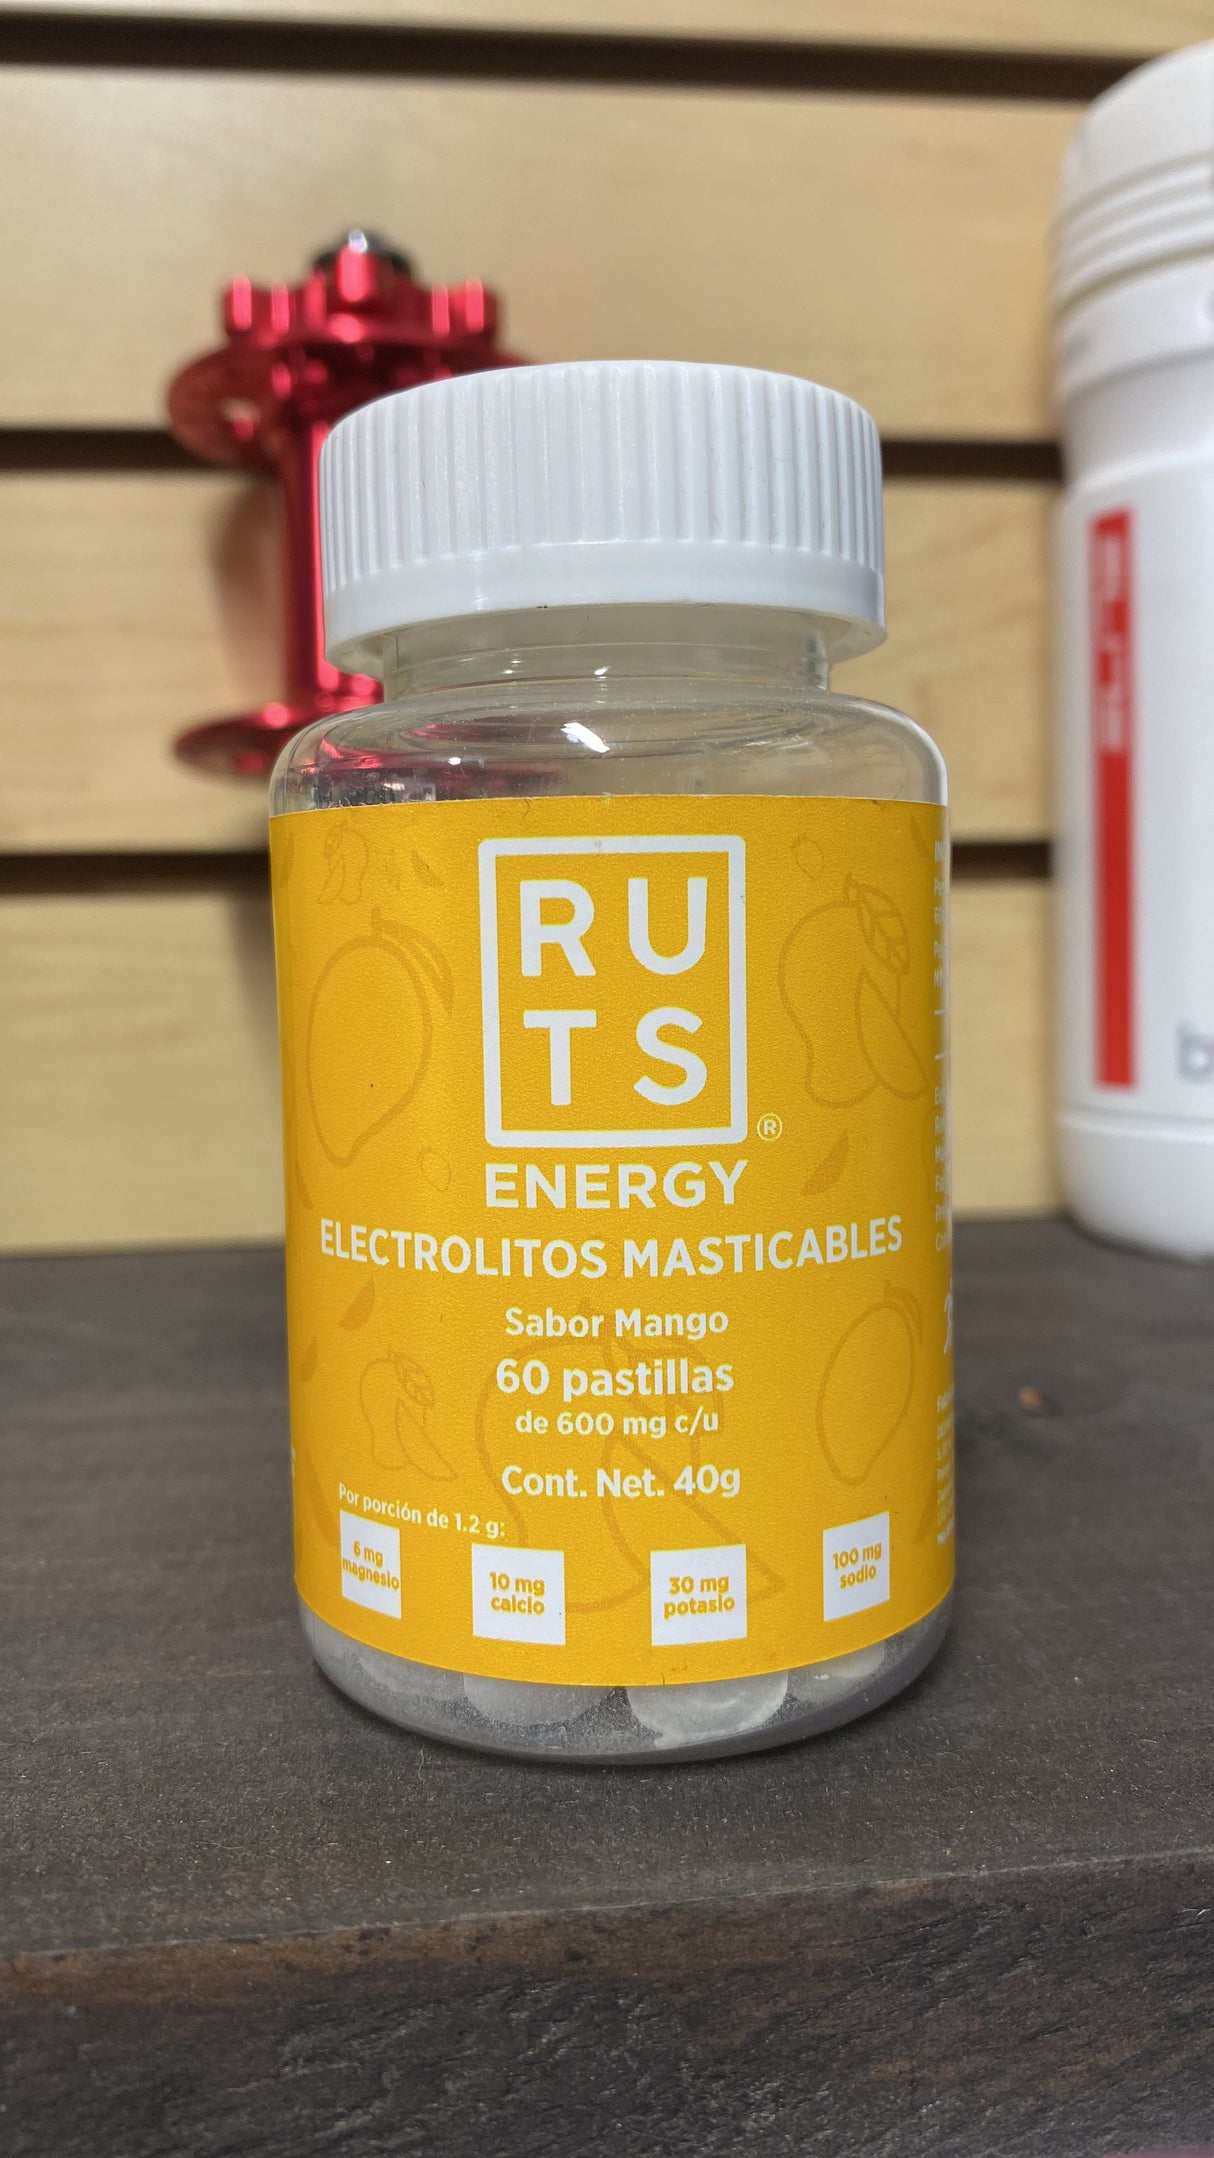 RUTS Electrolitos masticables sabor mango